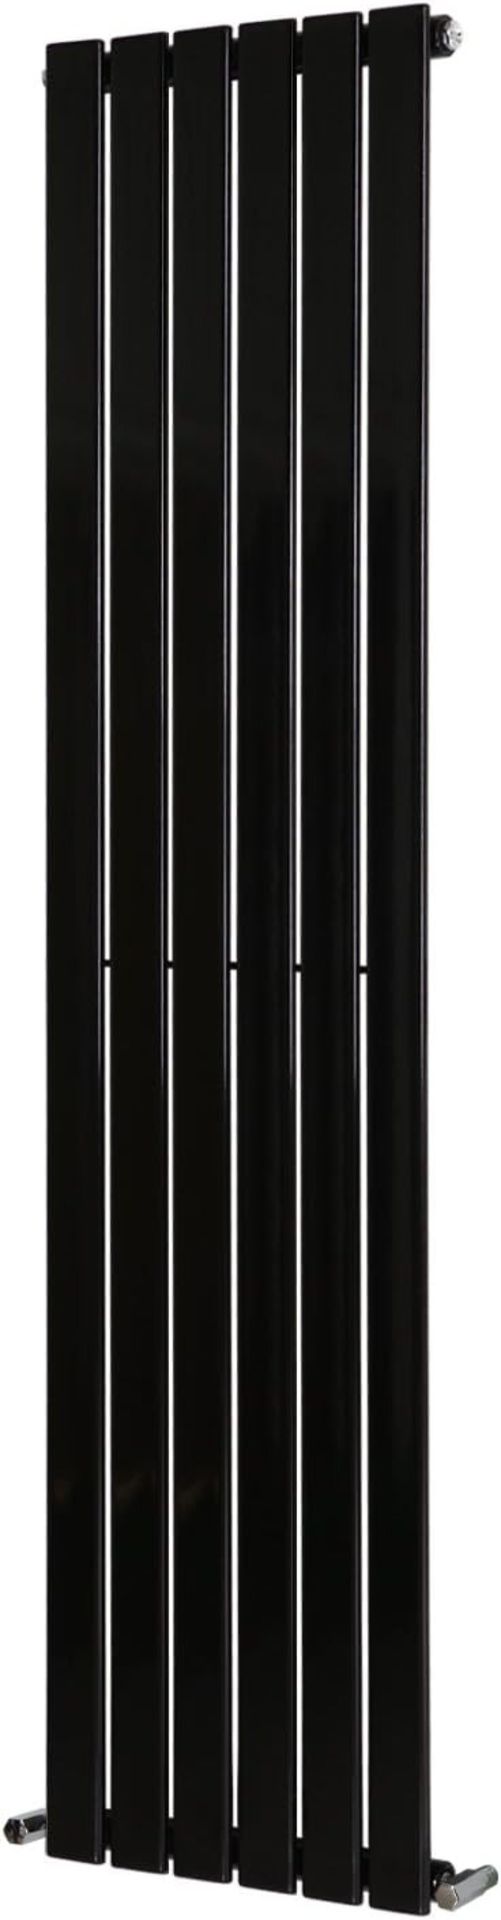 Modern Vertical Flat Panel radiators | Black 1800 x 480 mm (ER40) *DESIGN MAY VARY